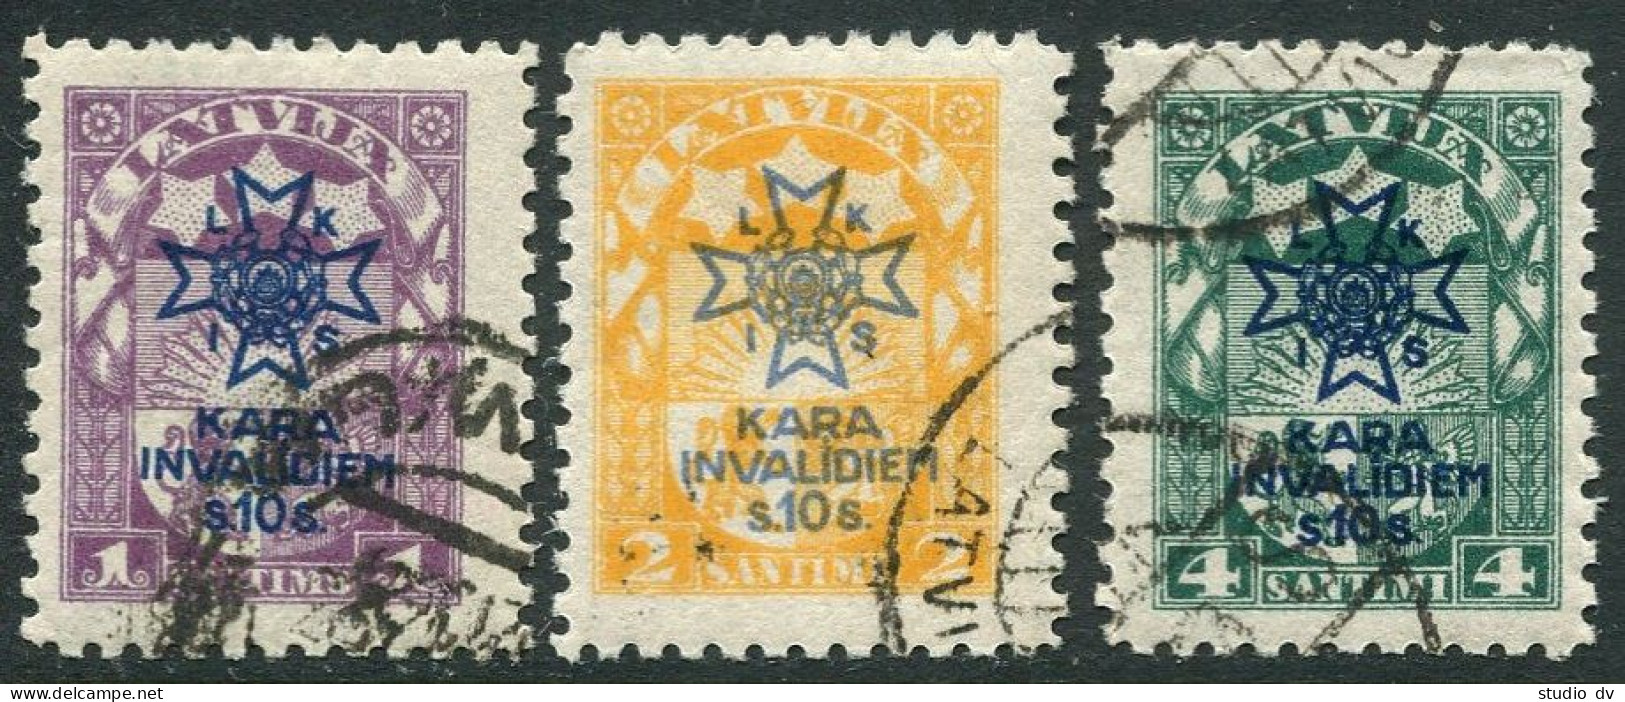 Latvia B21-B23, Used. Michel 100-102. Latvian War Invalids Society, 1923. - Latvia